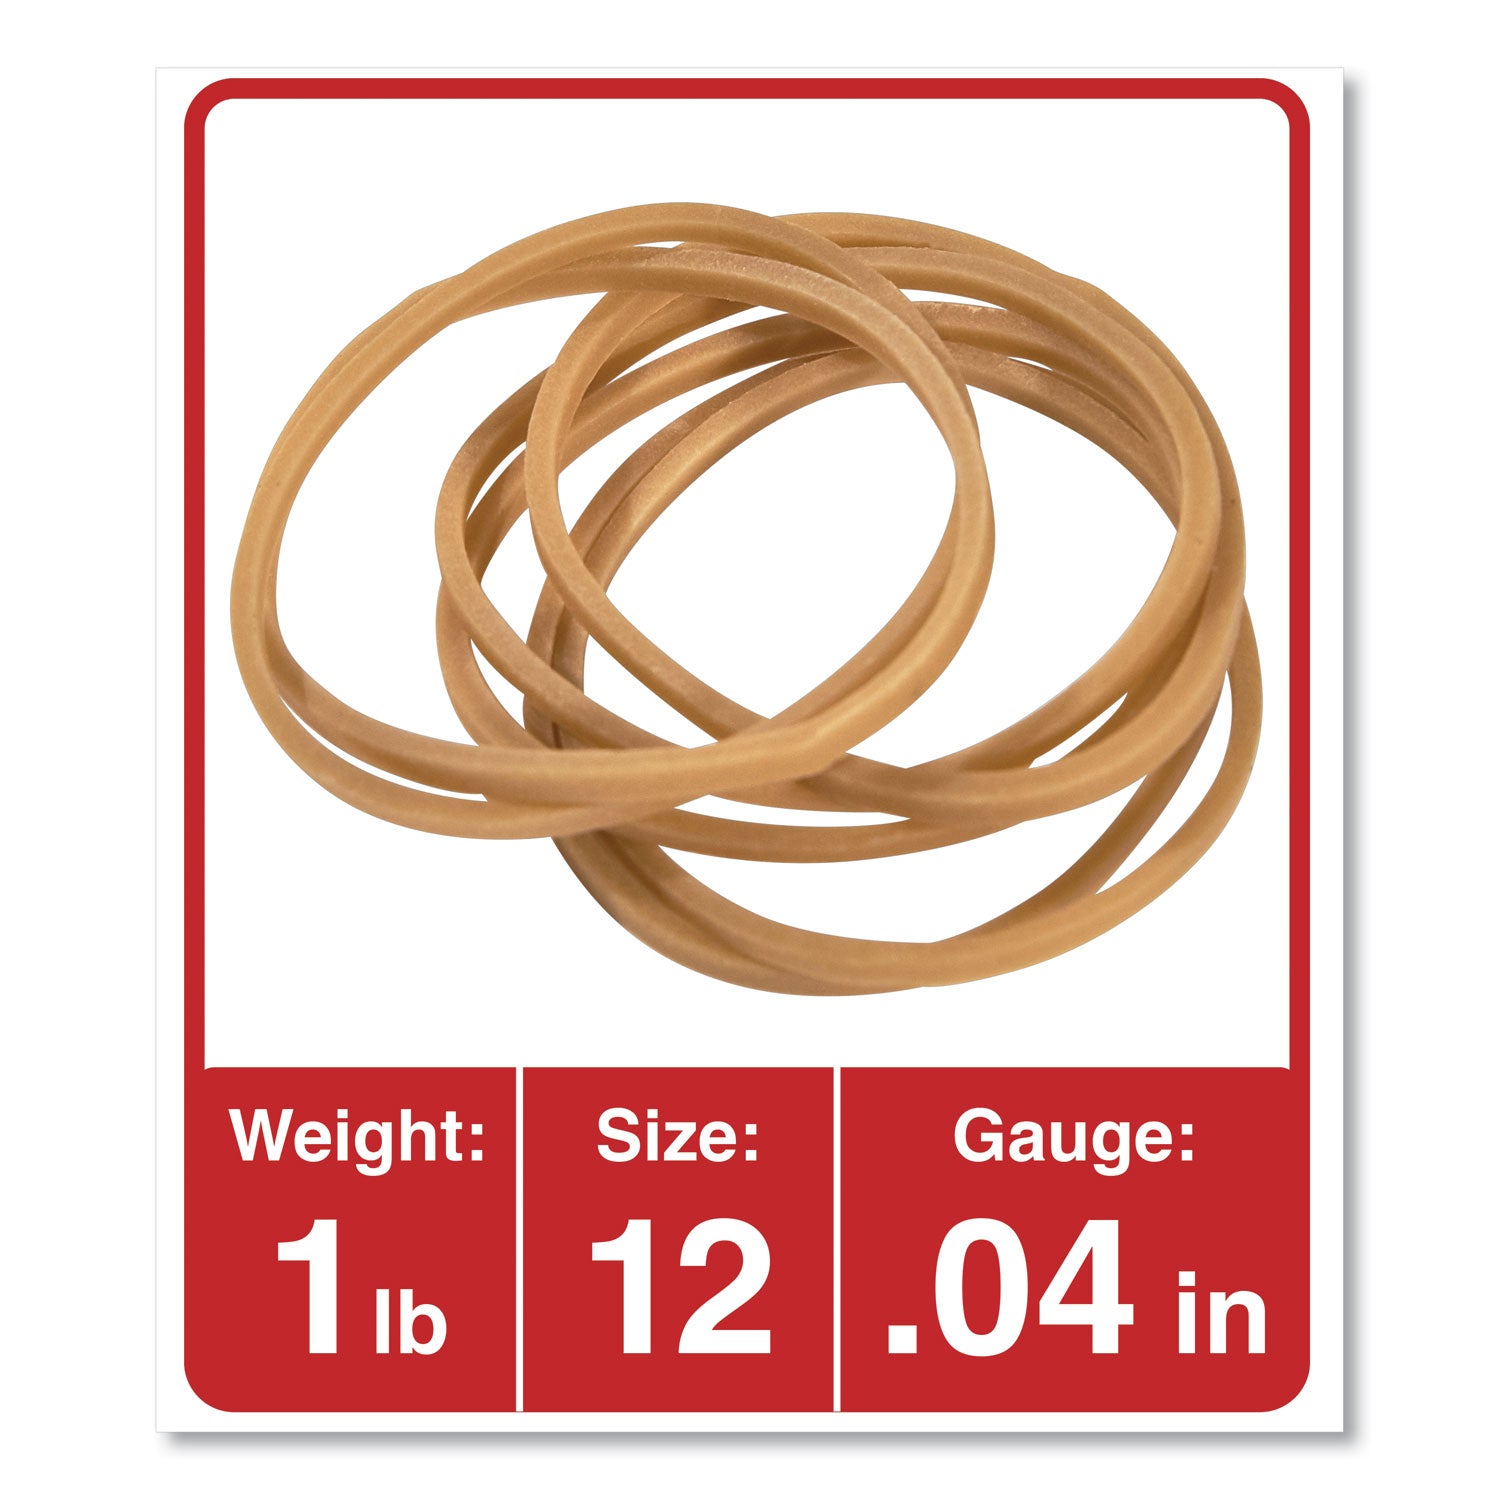 Rubber Bands, Size 12, 0.04" Gauge, Beige, 1 lb Box, 2,500/Pack - 